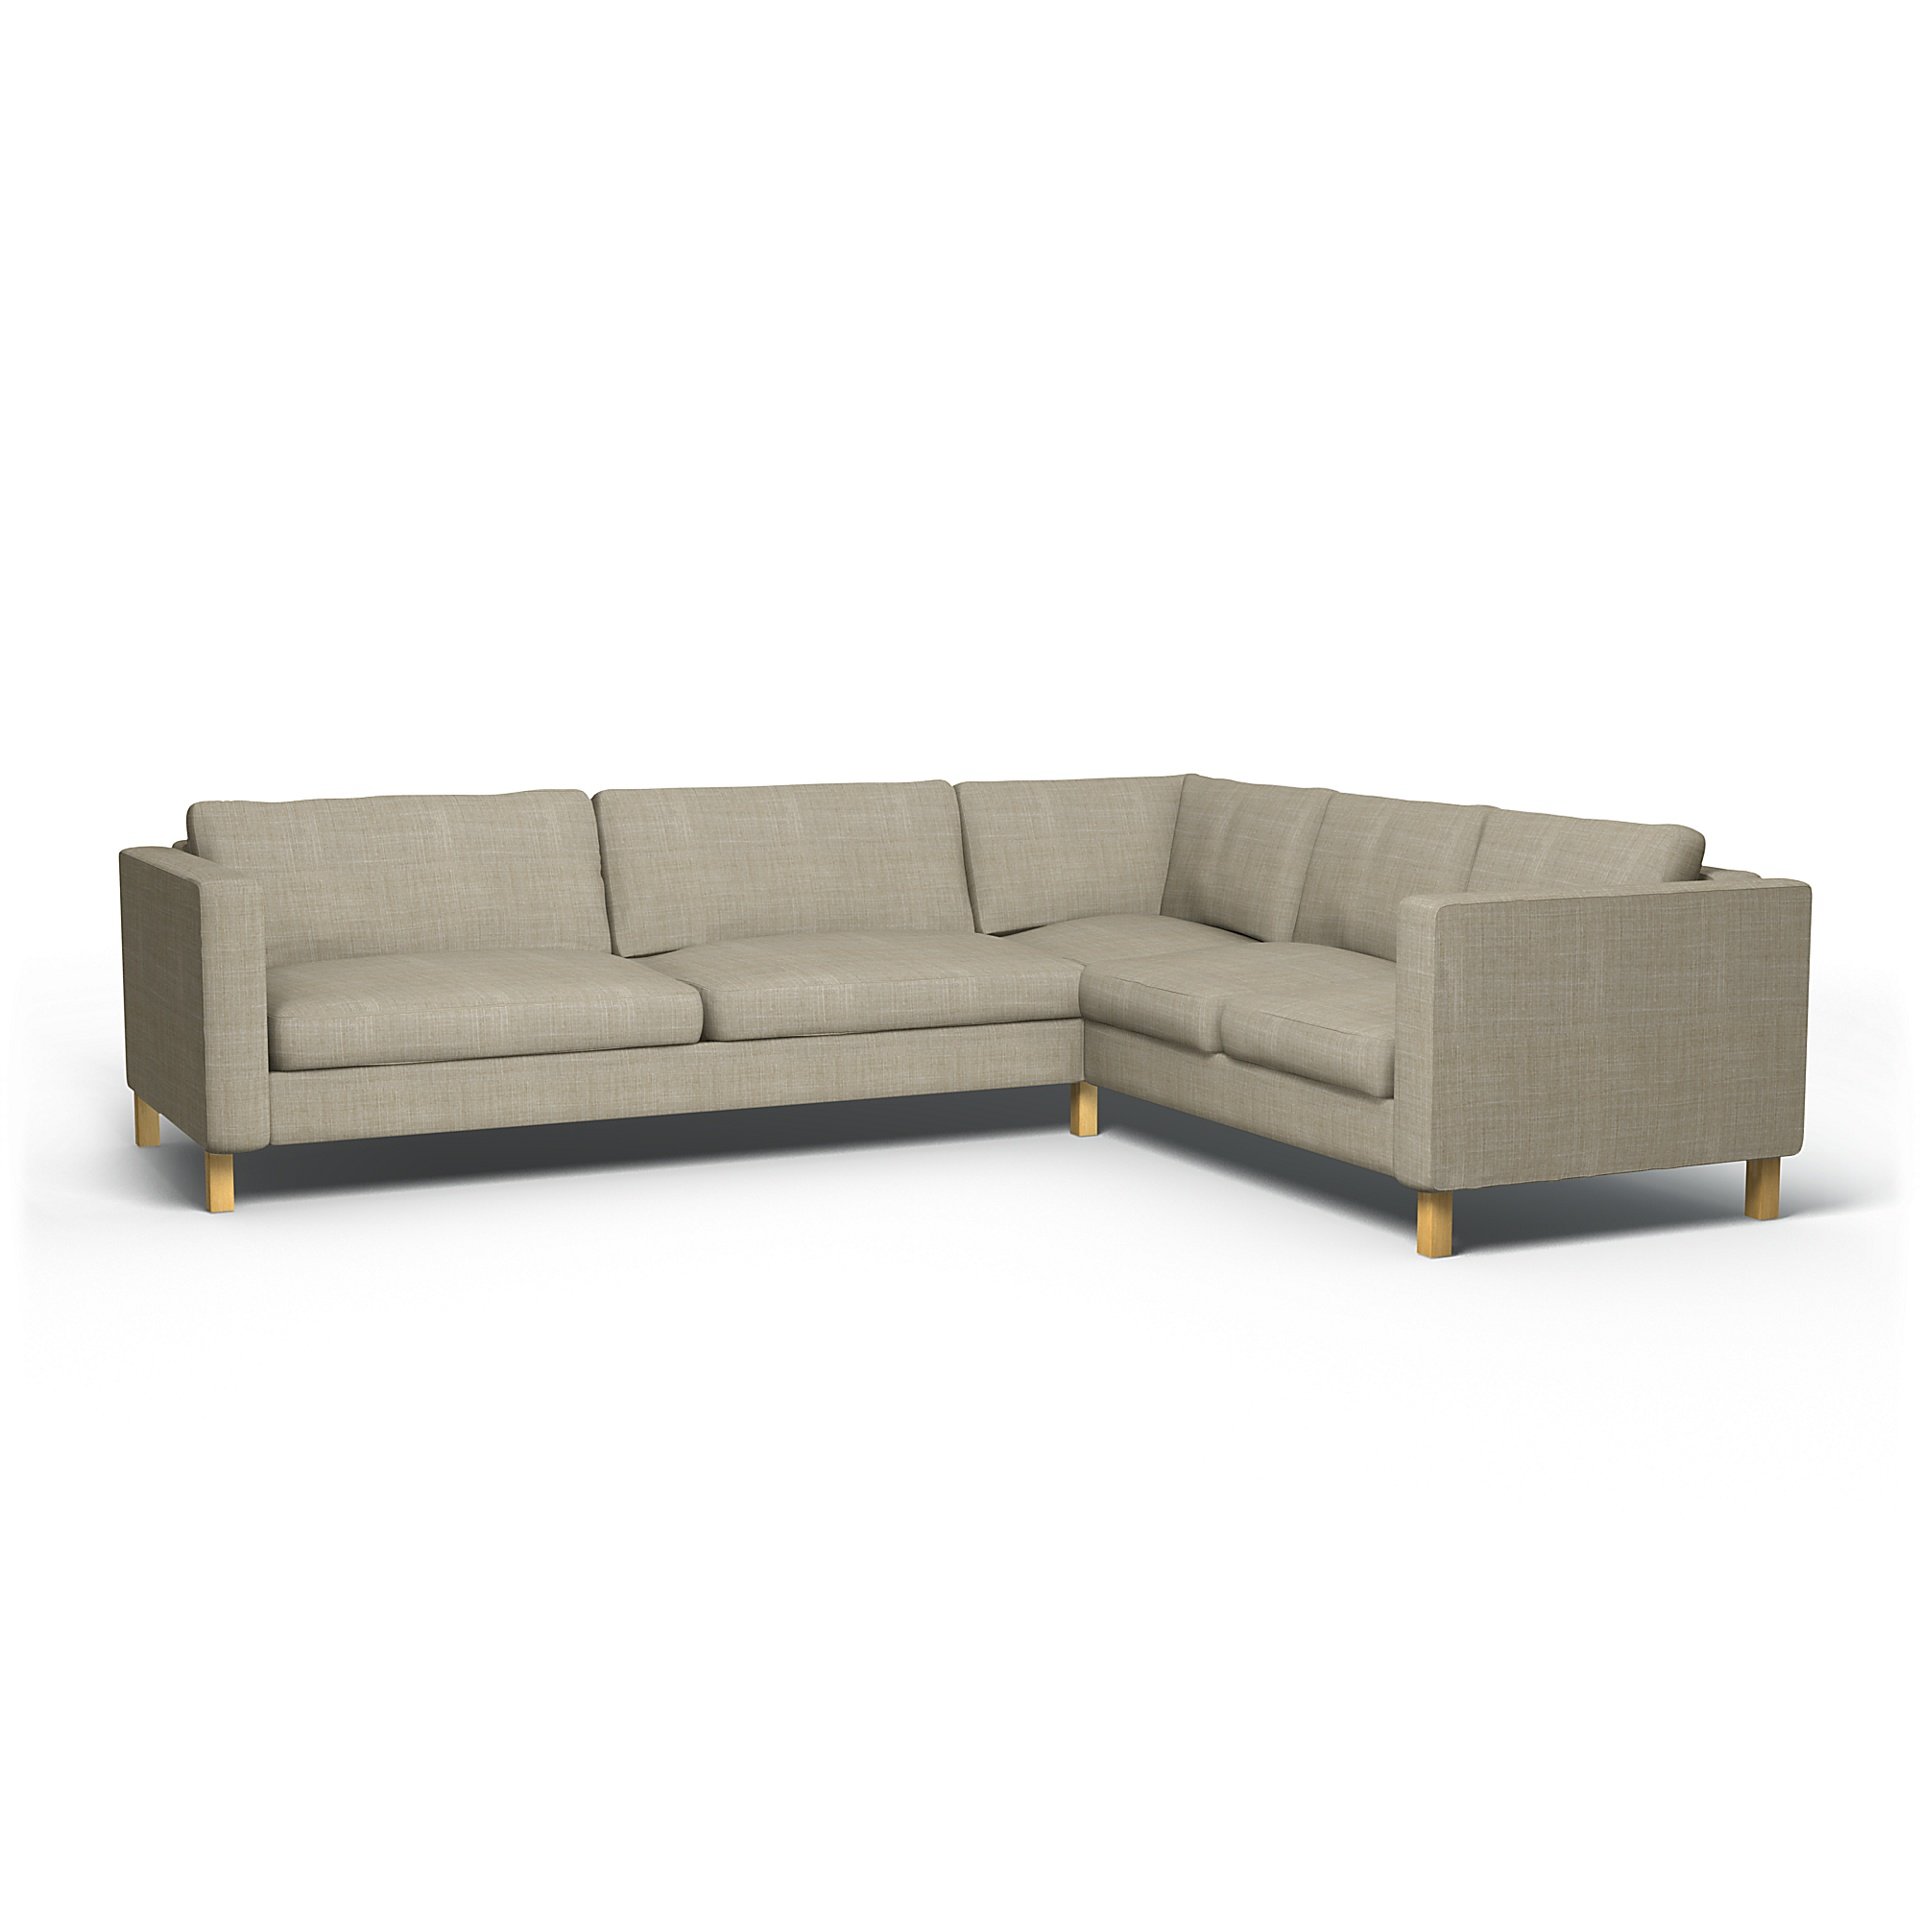 IKEA - Karlstad Corner Sofa Cover (3+2), Sand Beige, Boucle & Texture - Bemz